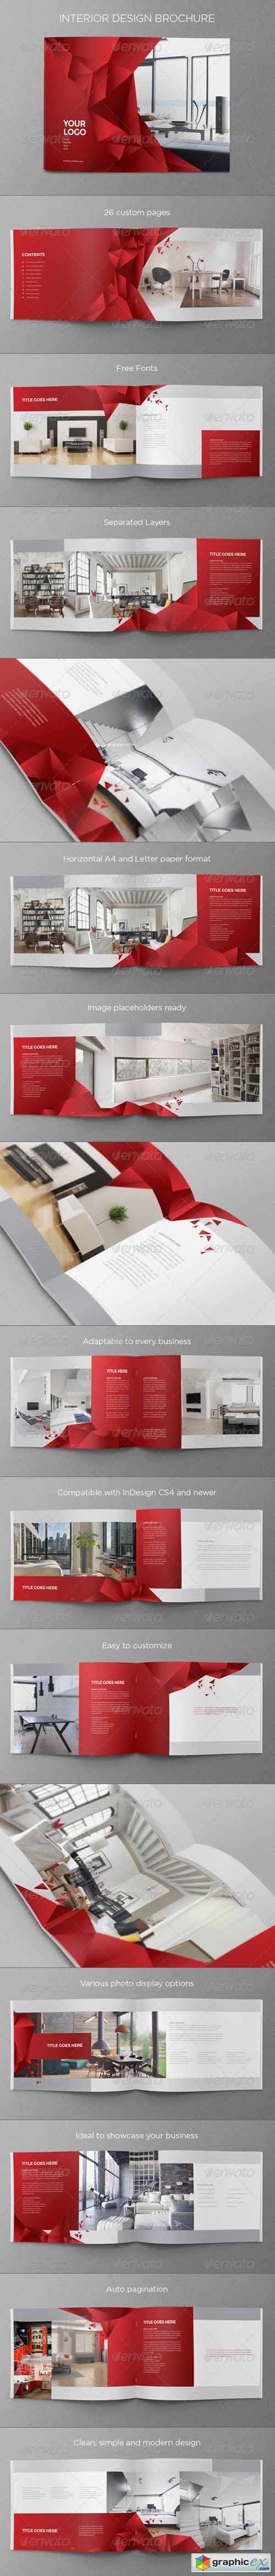 Interior Design Brochure 6913774